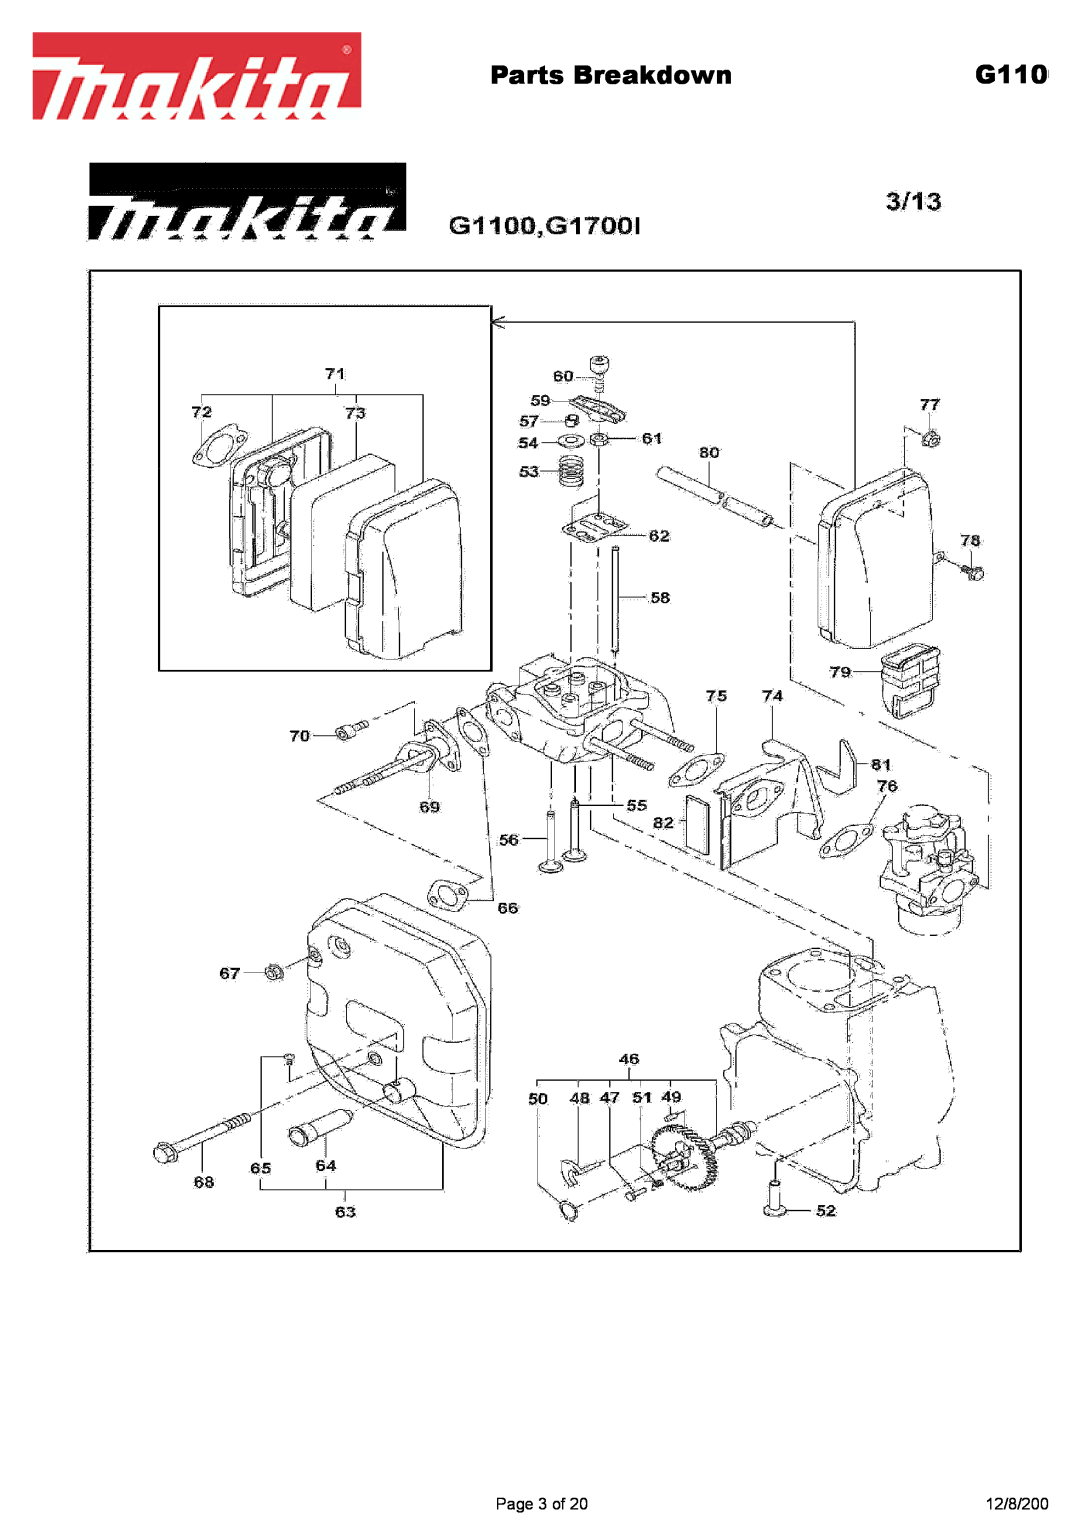 Makita G1700i manual Parts Breakdown, G110, Page 3 of, 12/8/200 